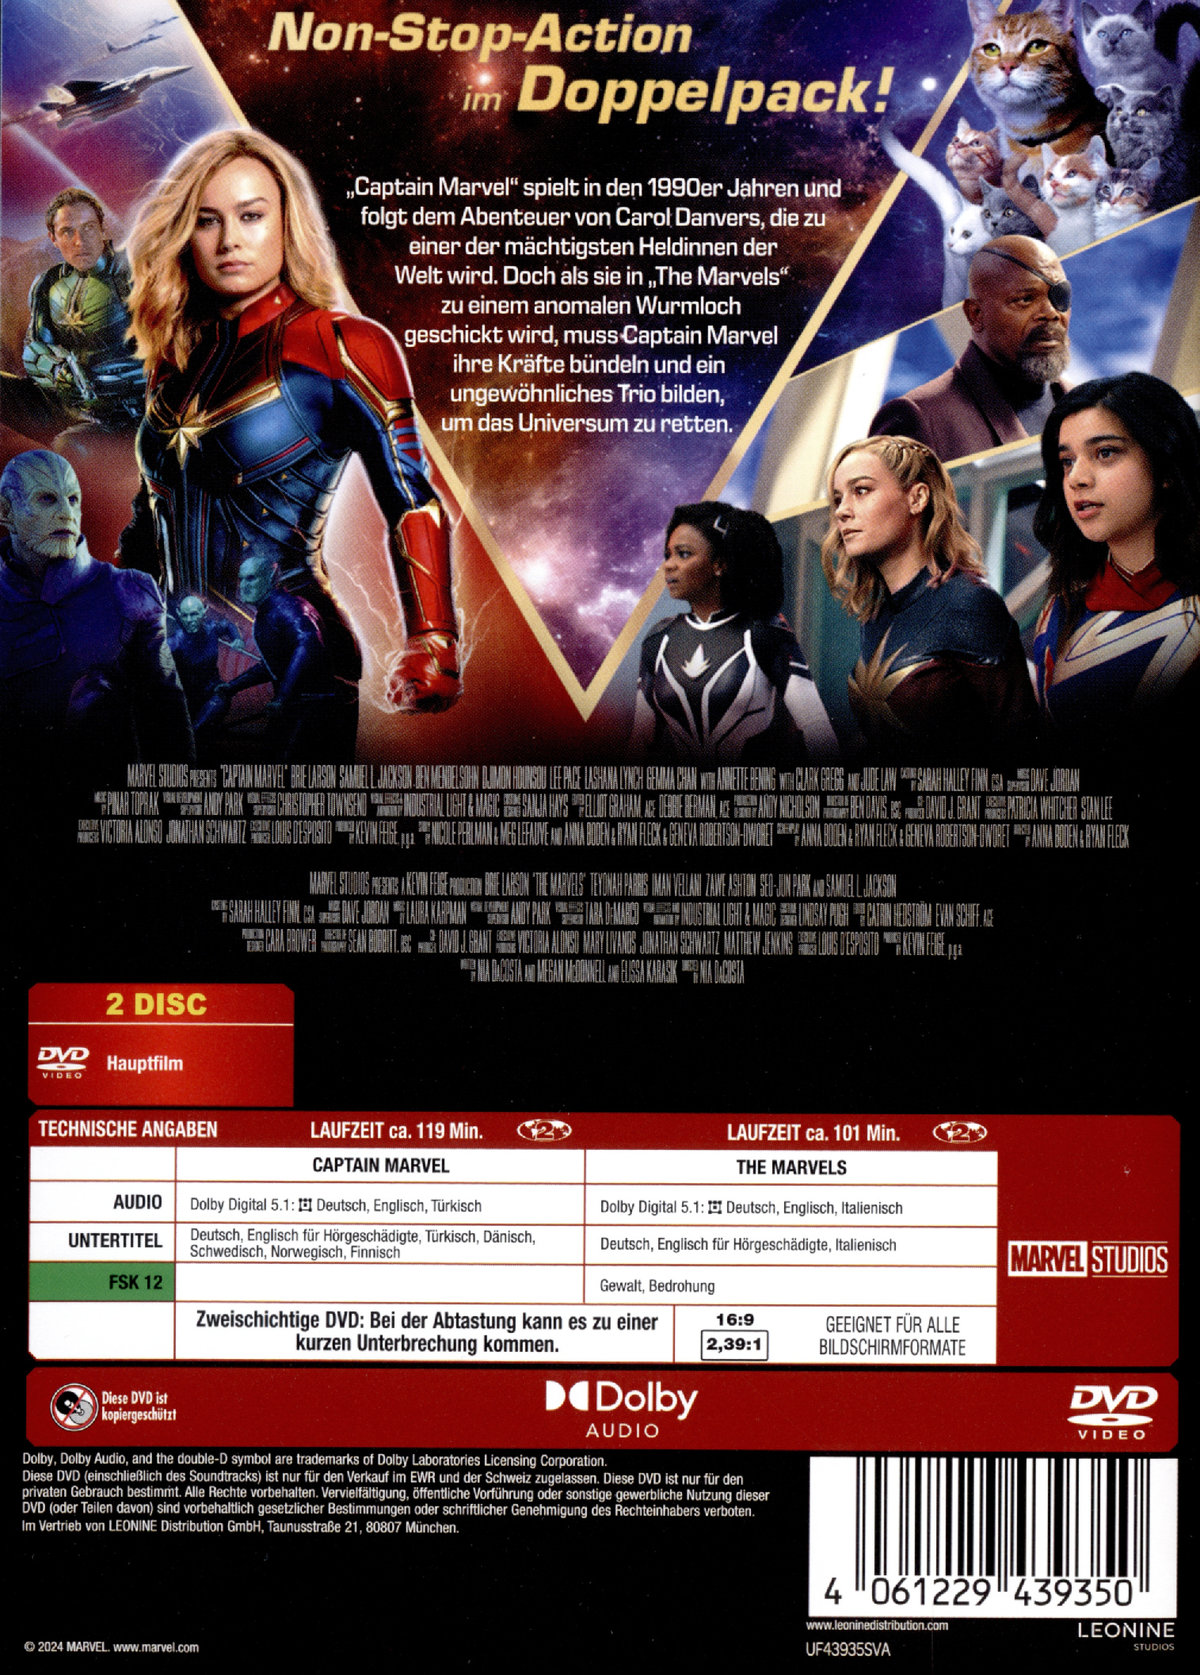 Captain Marvel / The Marvels  [2 DVDs]  (DVD)